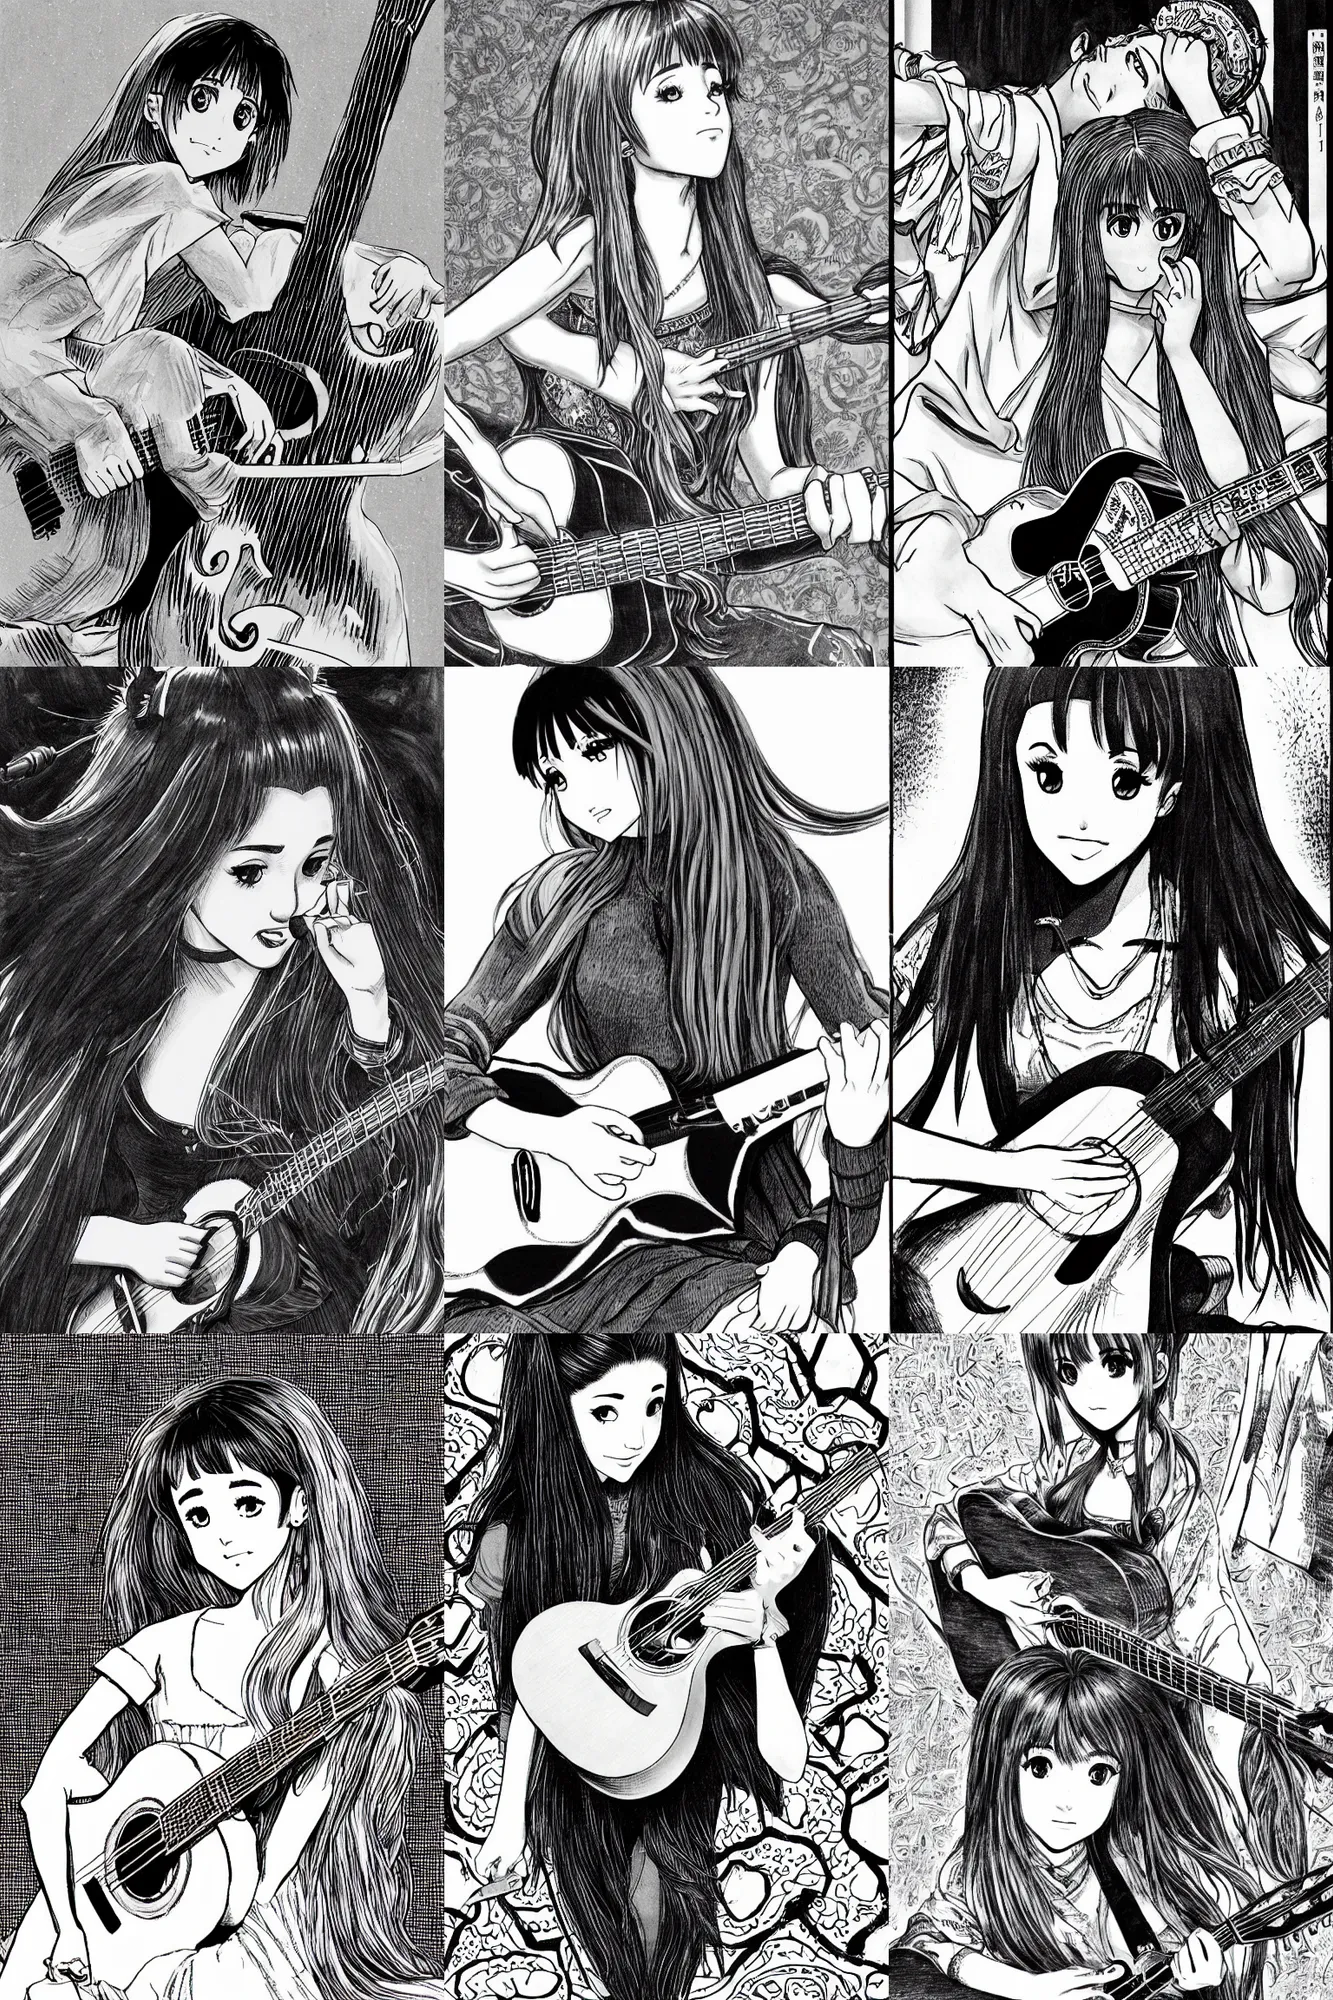 Prompt: Ariana Grande playing acoustic guitar, black and white manga, highly detailed, art by Kentaro Miura